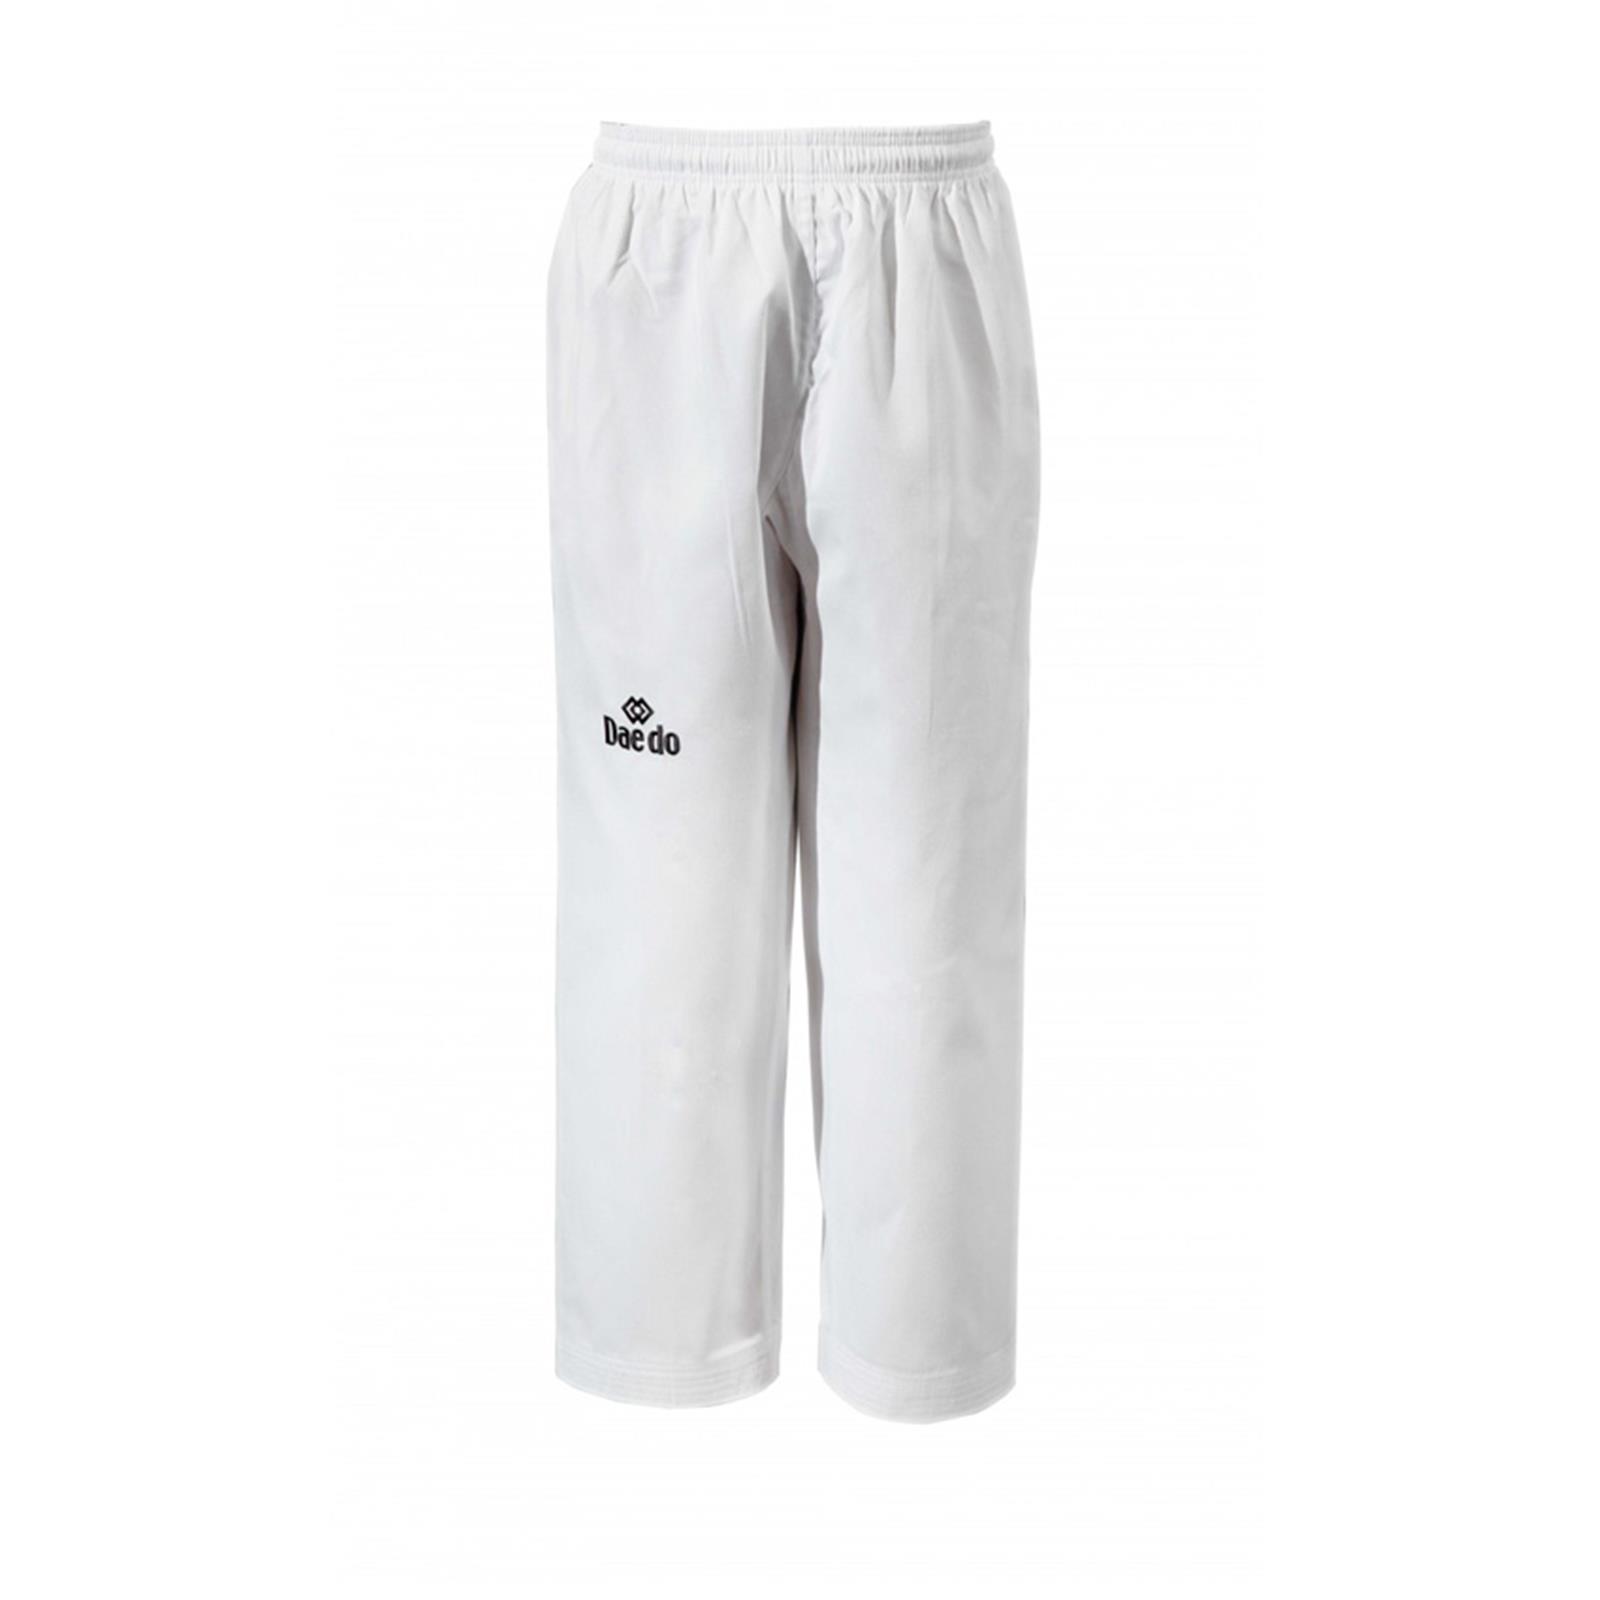 Dae Do Pantalone per Dobok Bianco (8° - 210cm - BIANCO)